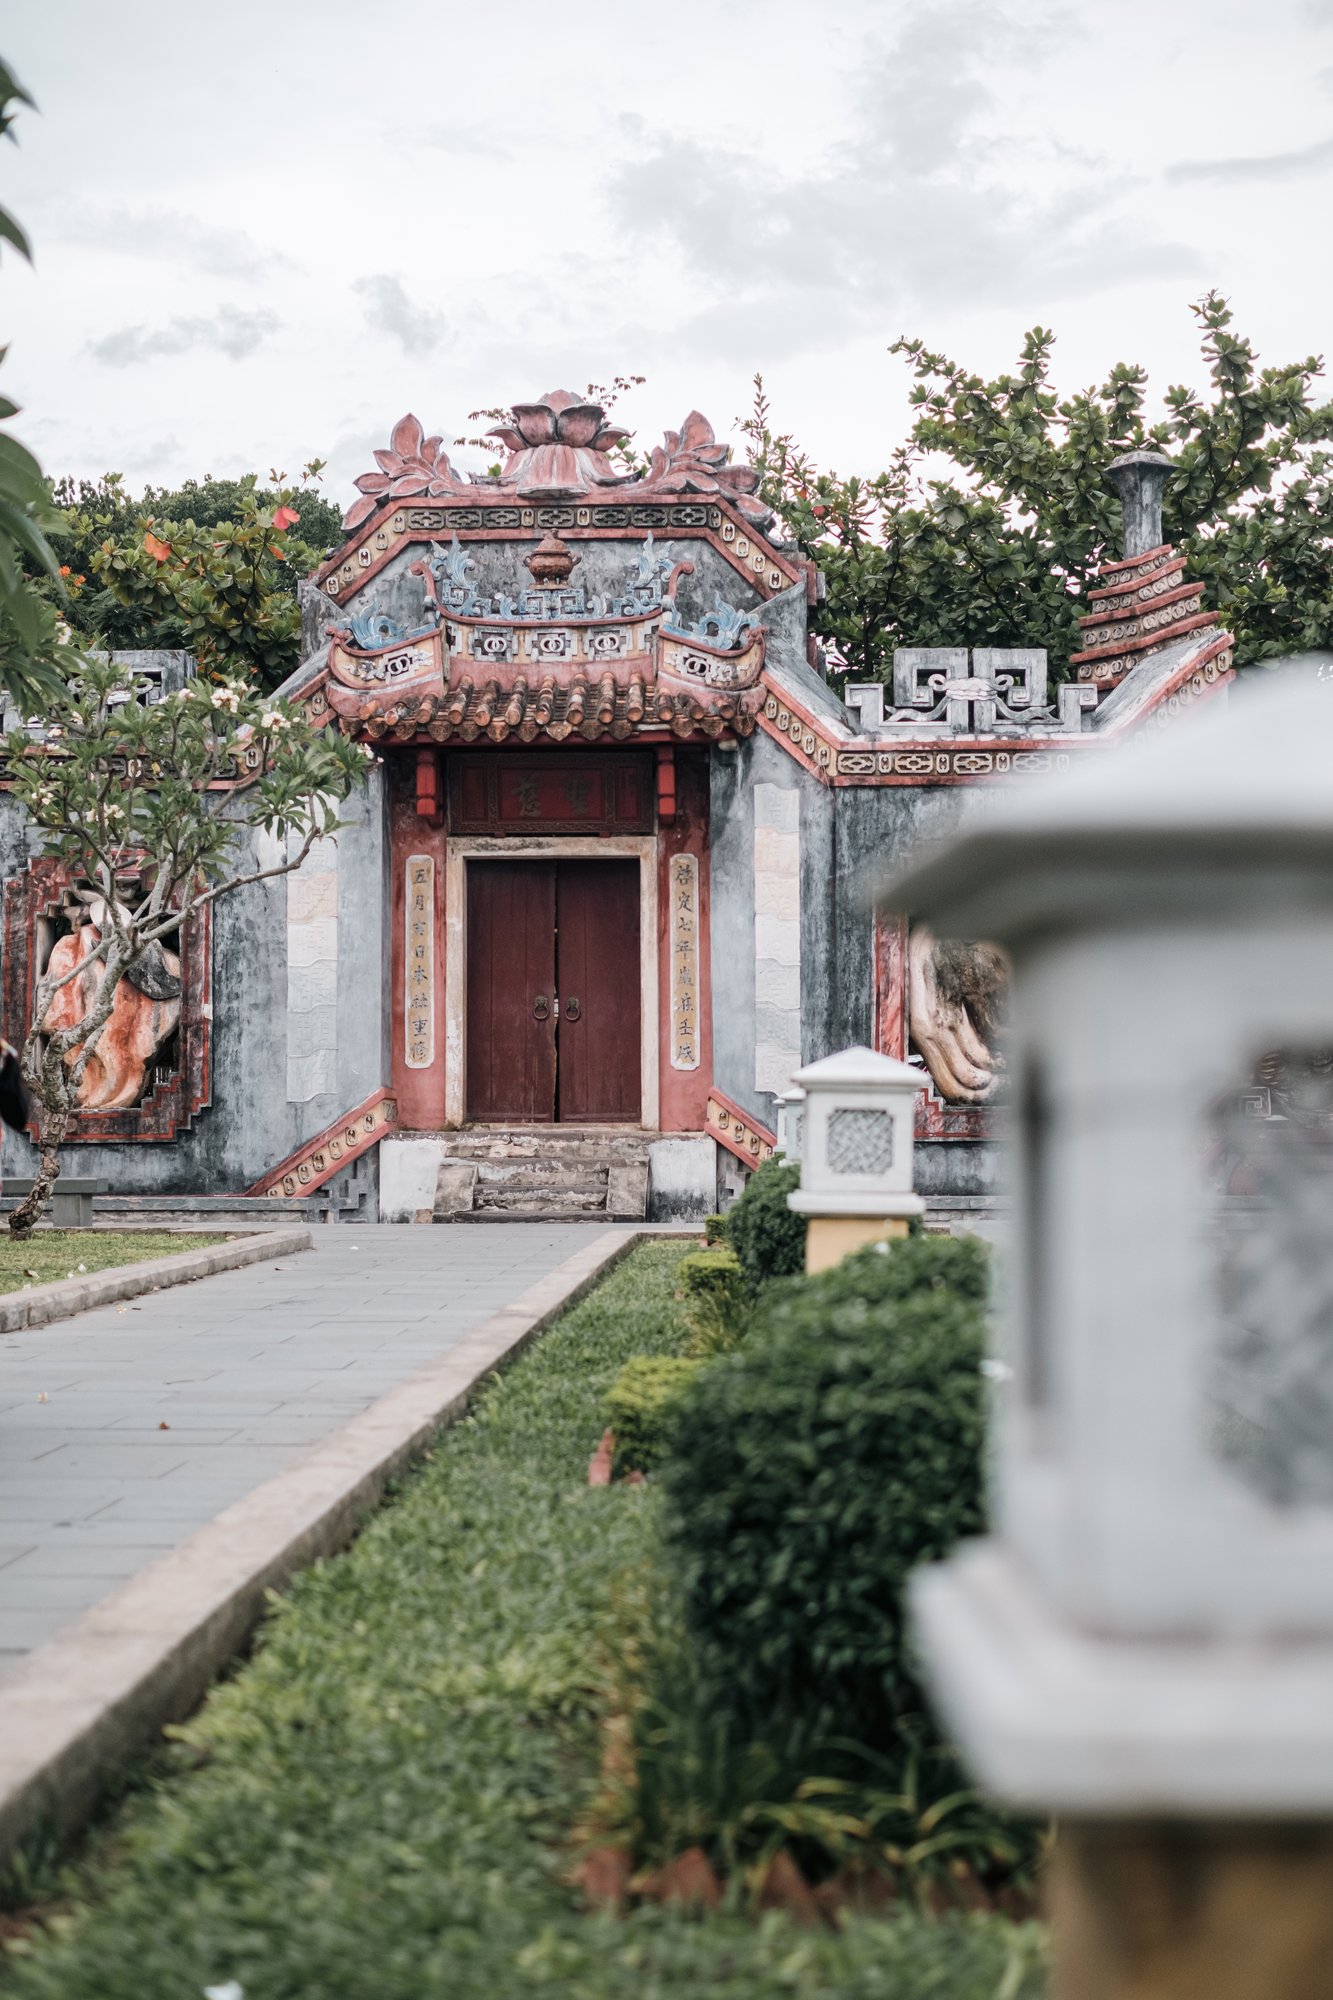 The Ba Mu Temple Gate In Hoi An